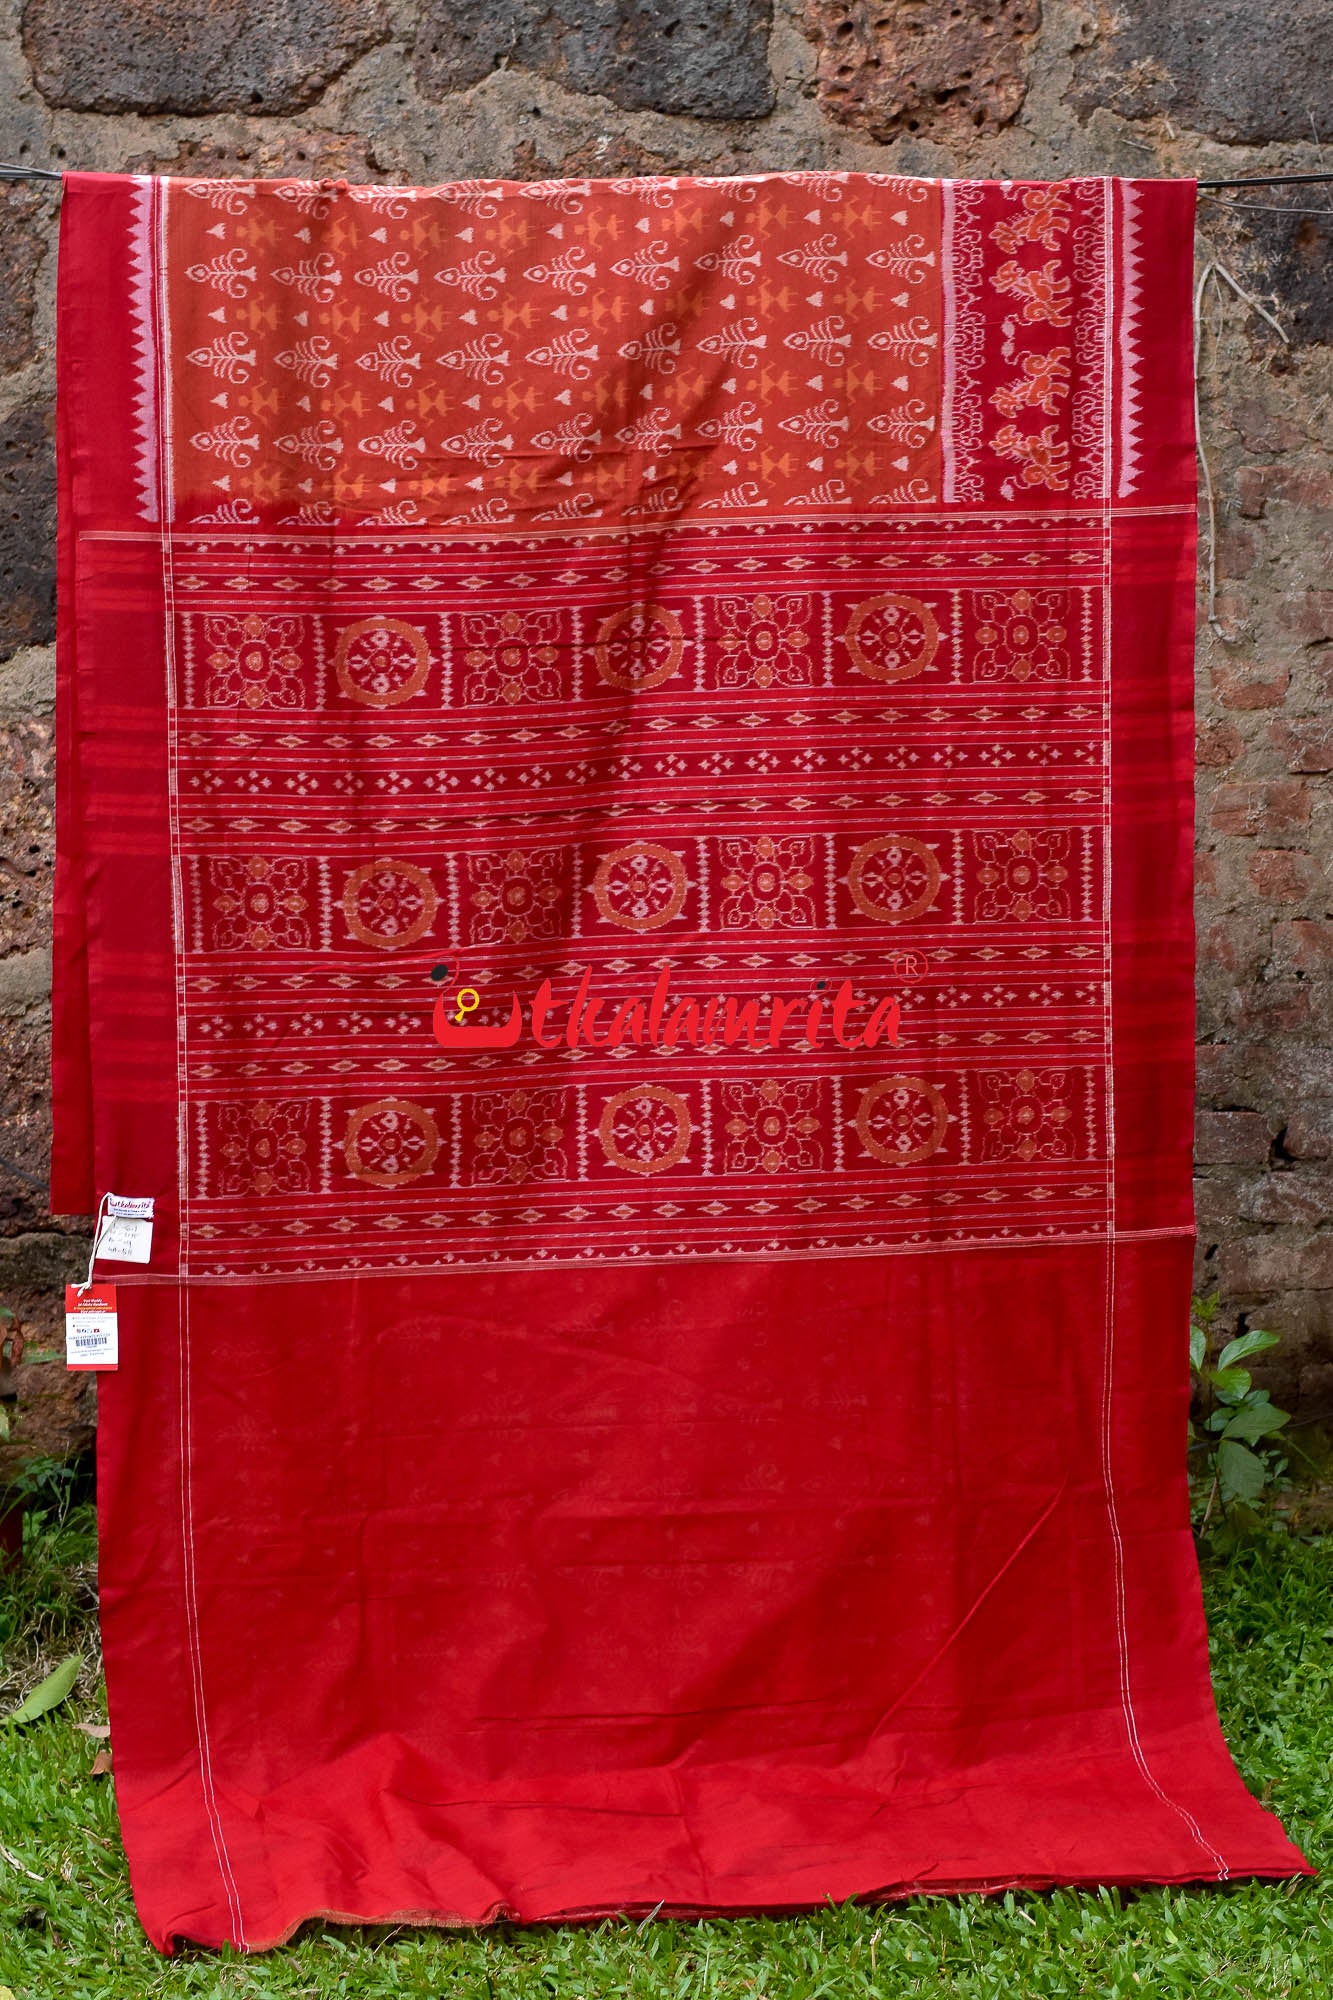 Lion Border Brown Red Sambalpuri Cotton Saree